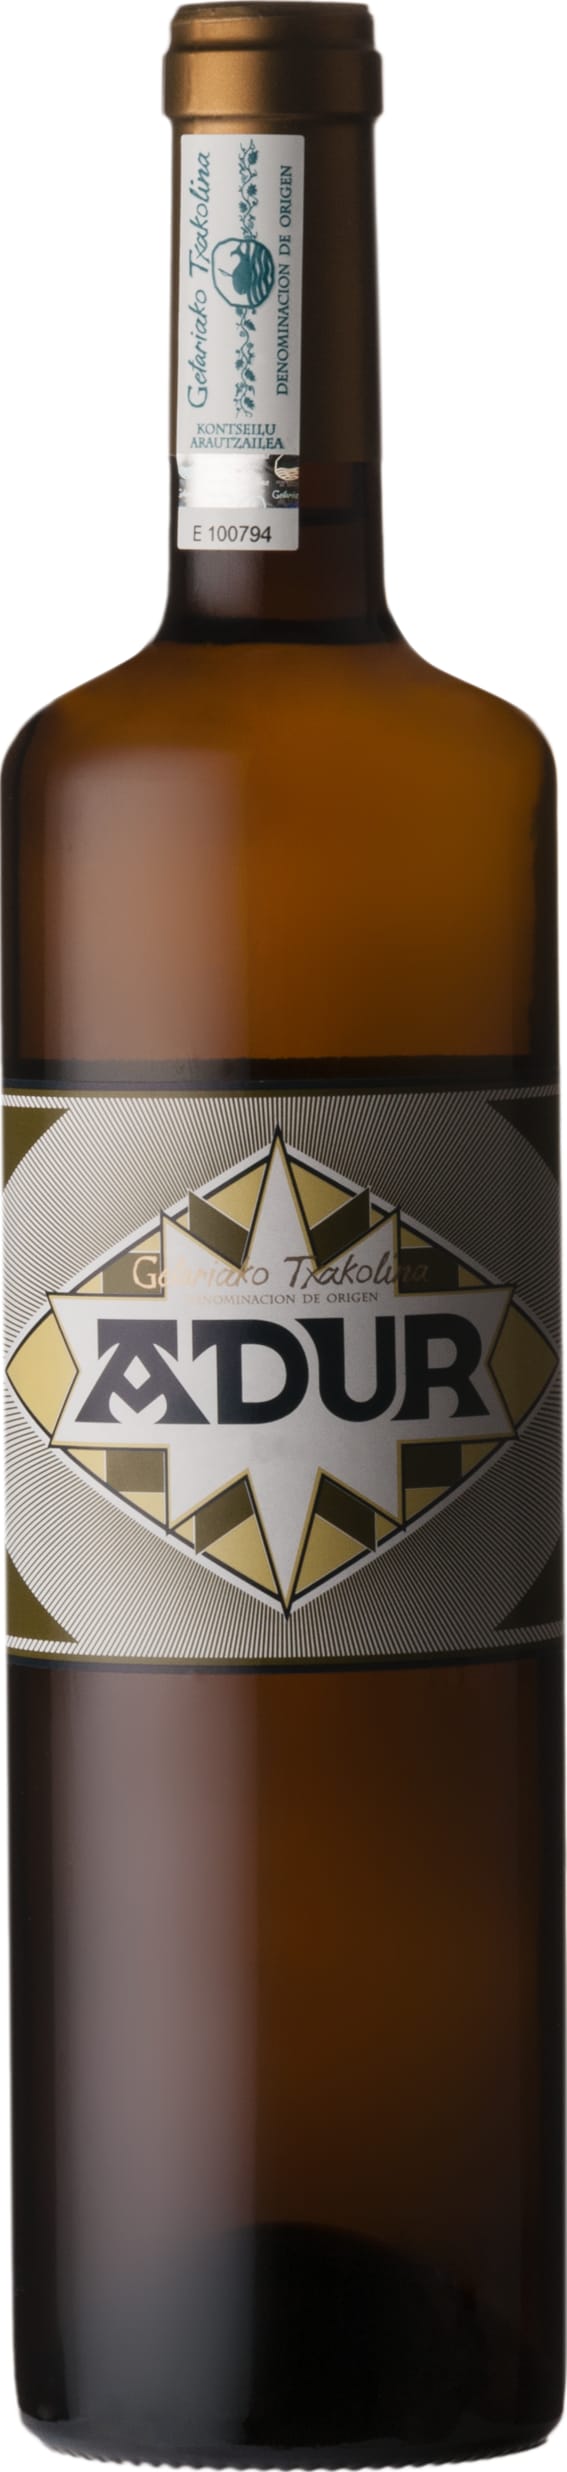 Adur Txakolina 2019 75cl - Buy Adur Wines from GREAT WINES DIRECT wine shop